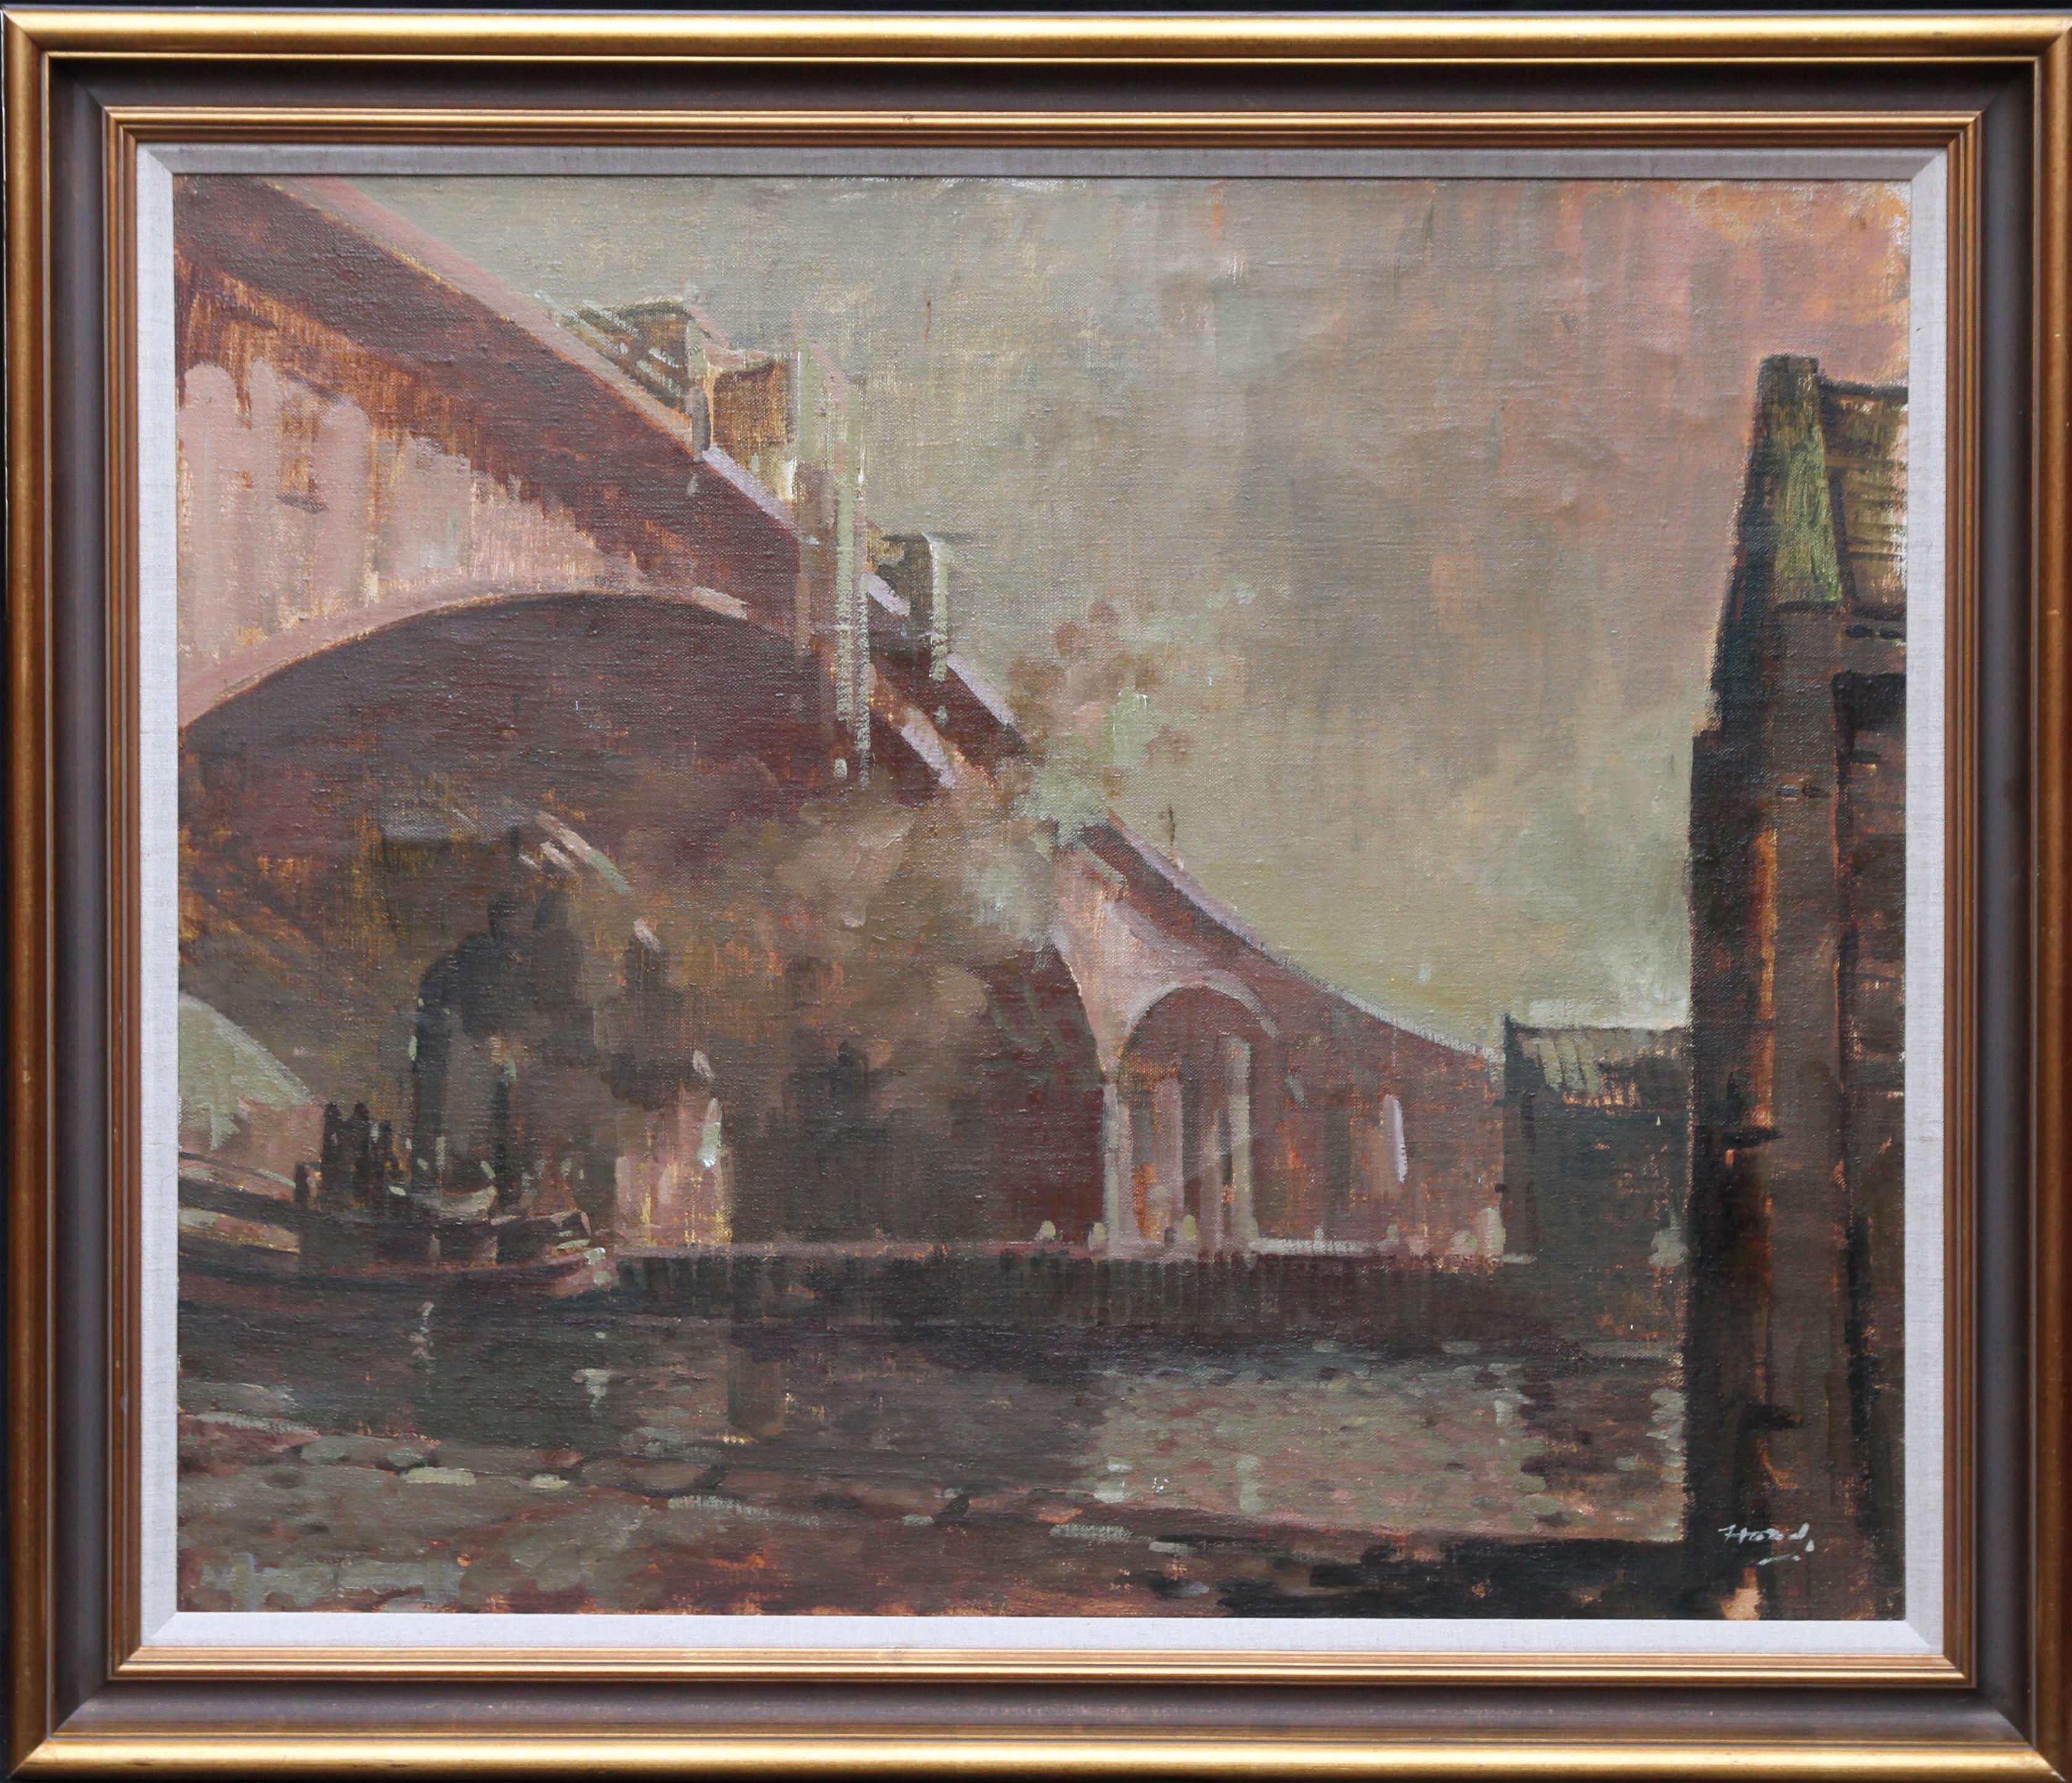 Ernest Burnett Hood Landscape Painting - The Bridge - Scottish 20thC art oil painting Industrial river landscape Glasgow